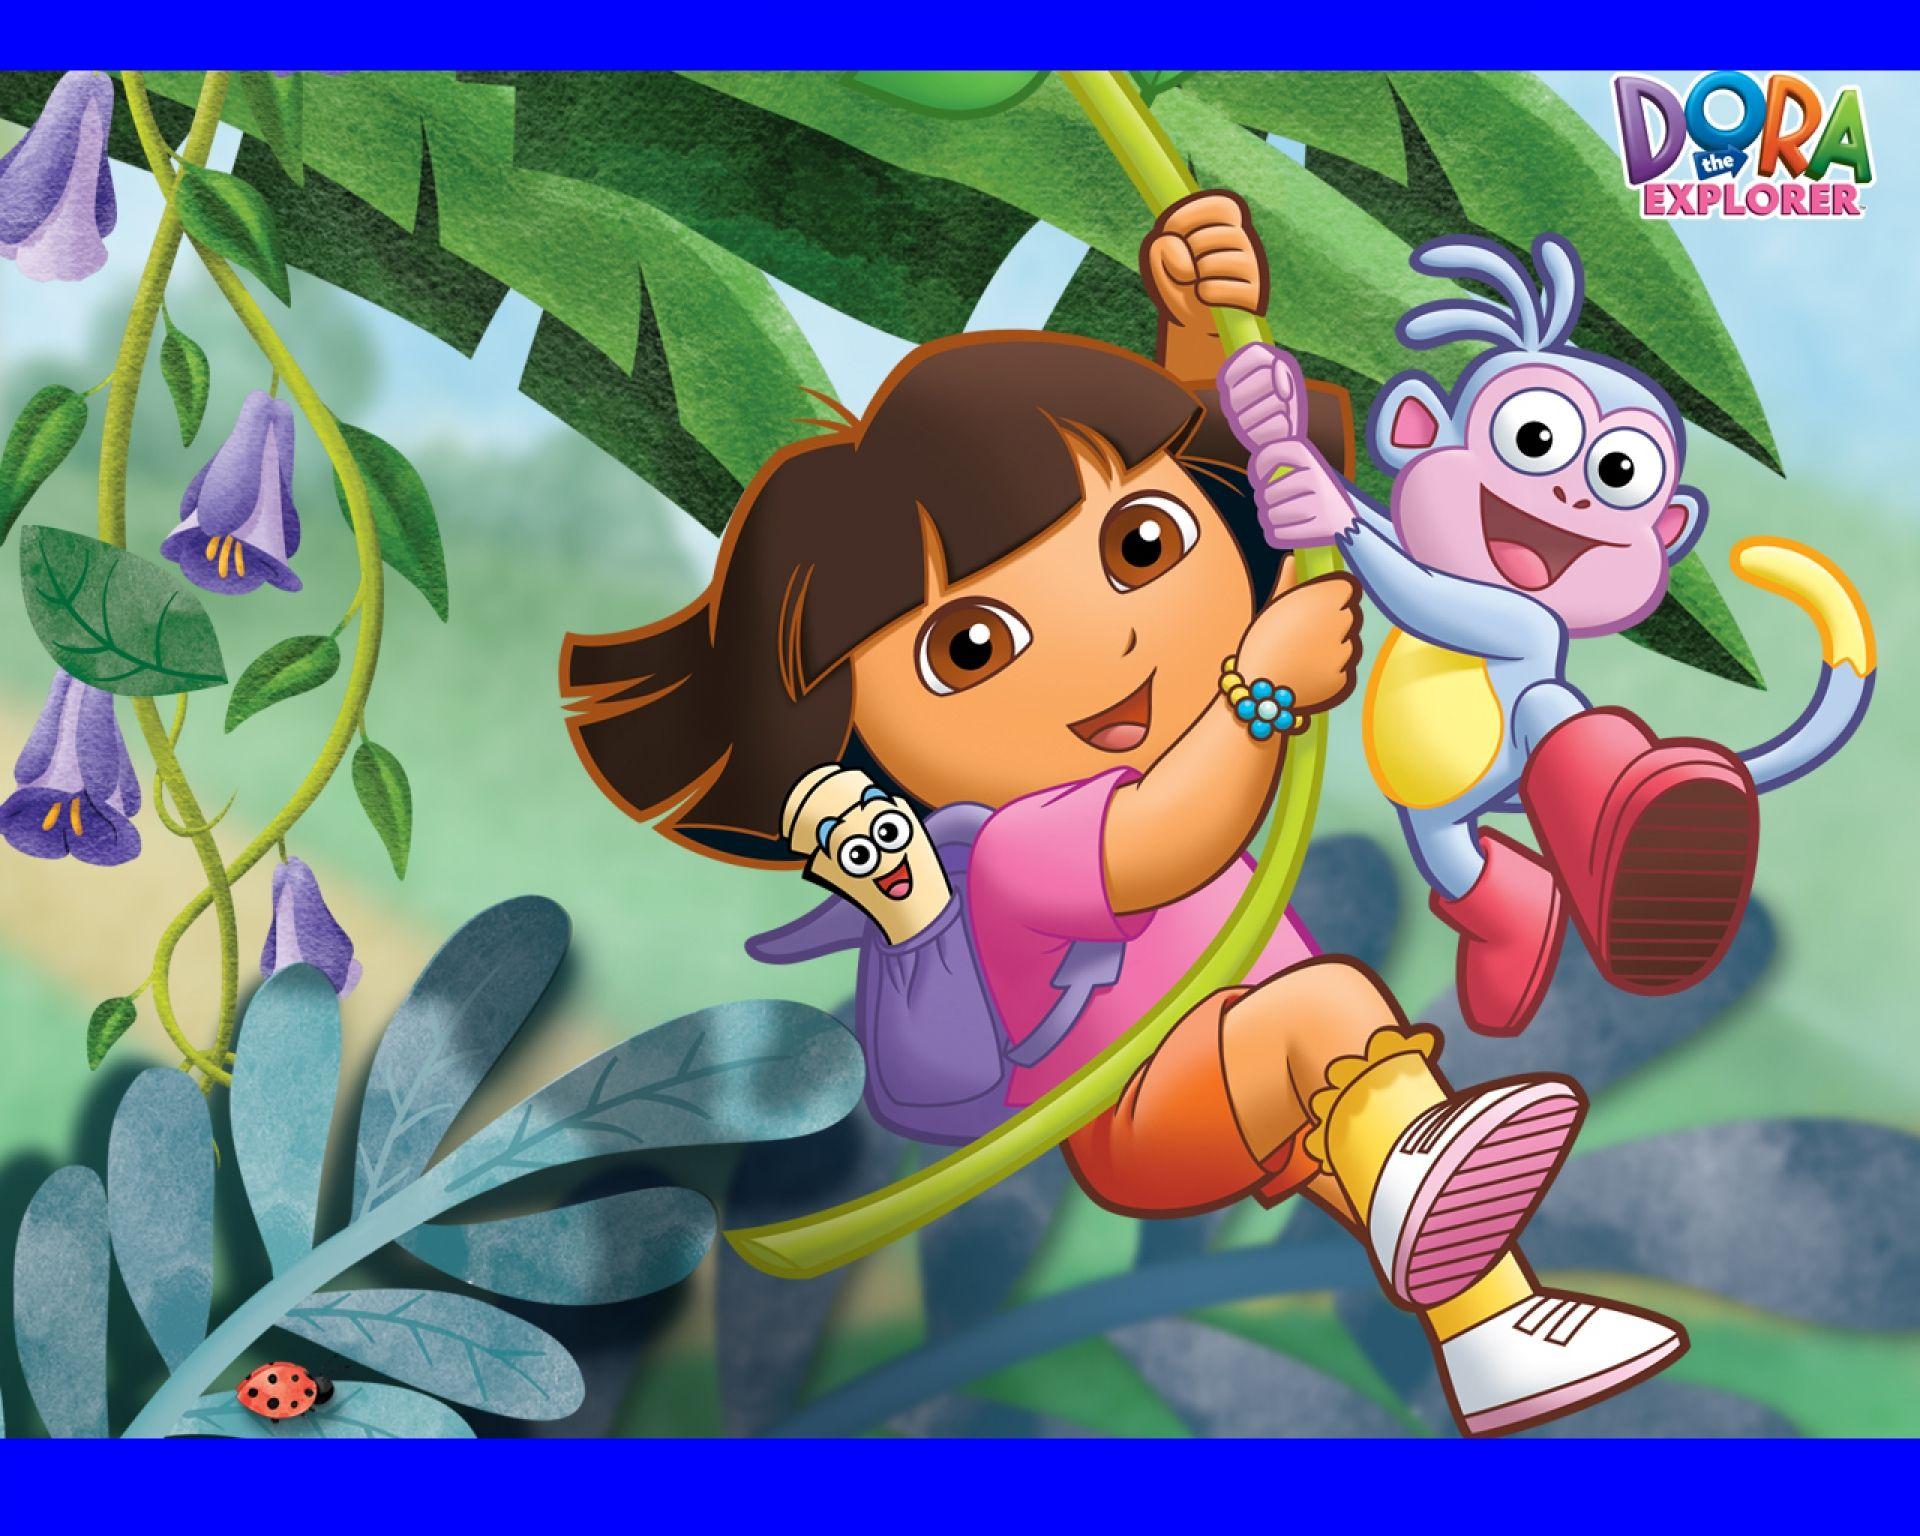 Download Dora The Explorer HD Wallpapers Windows Marketplace.